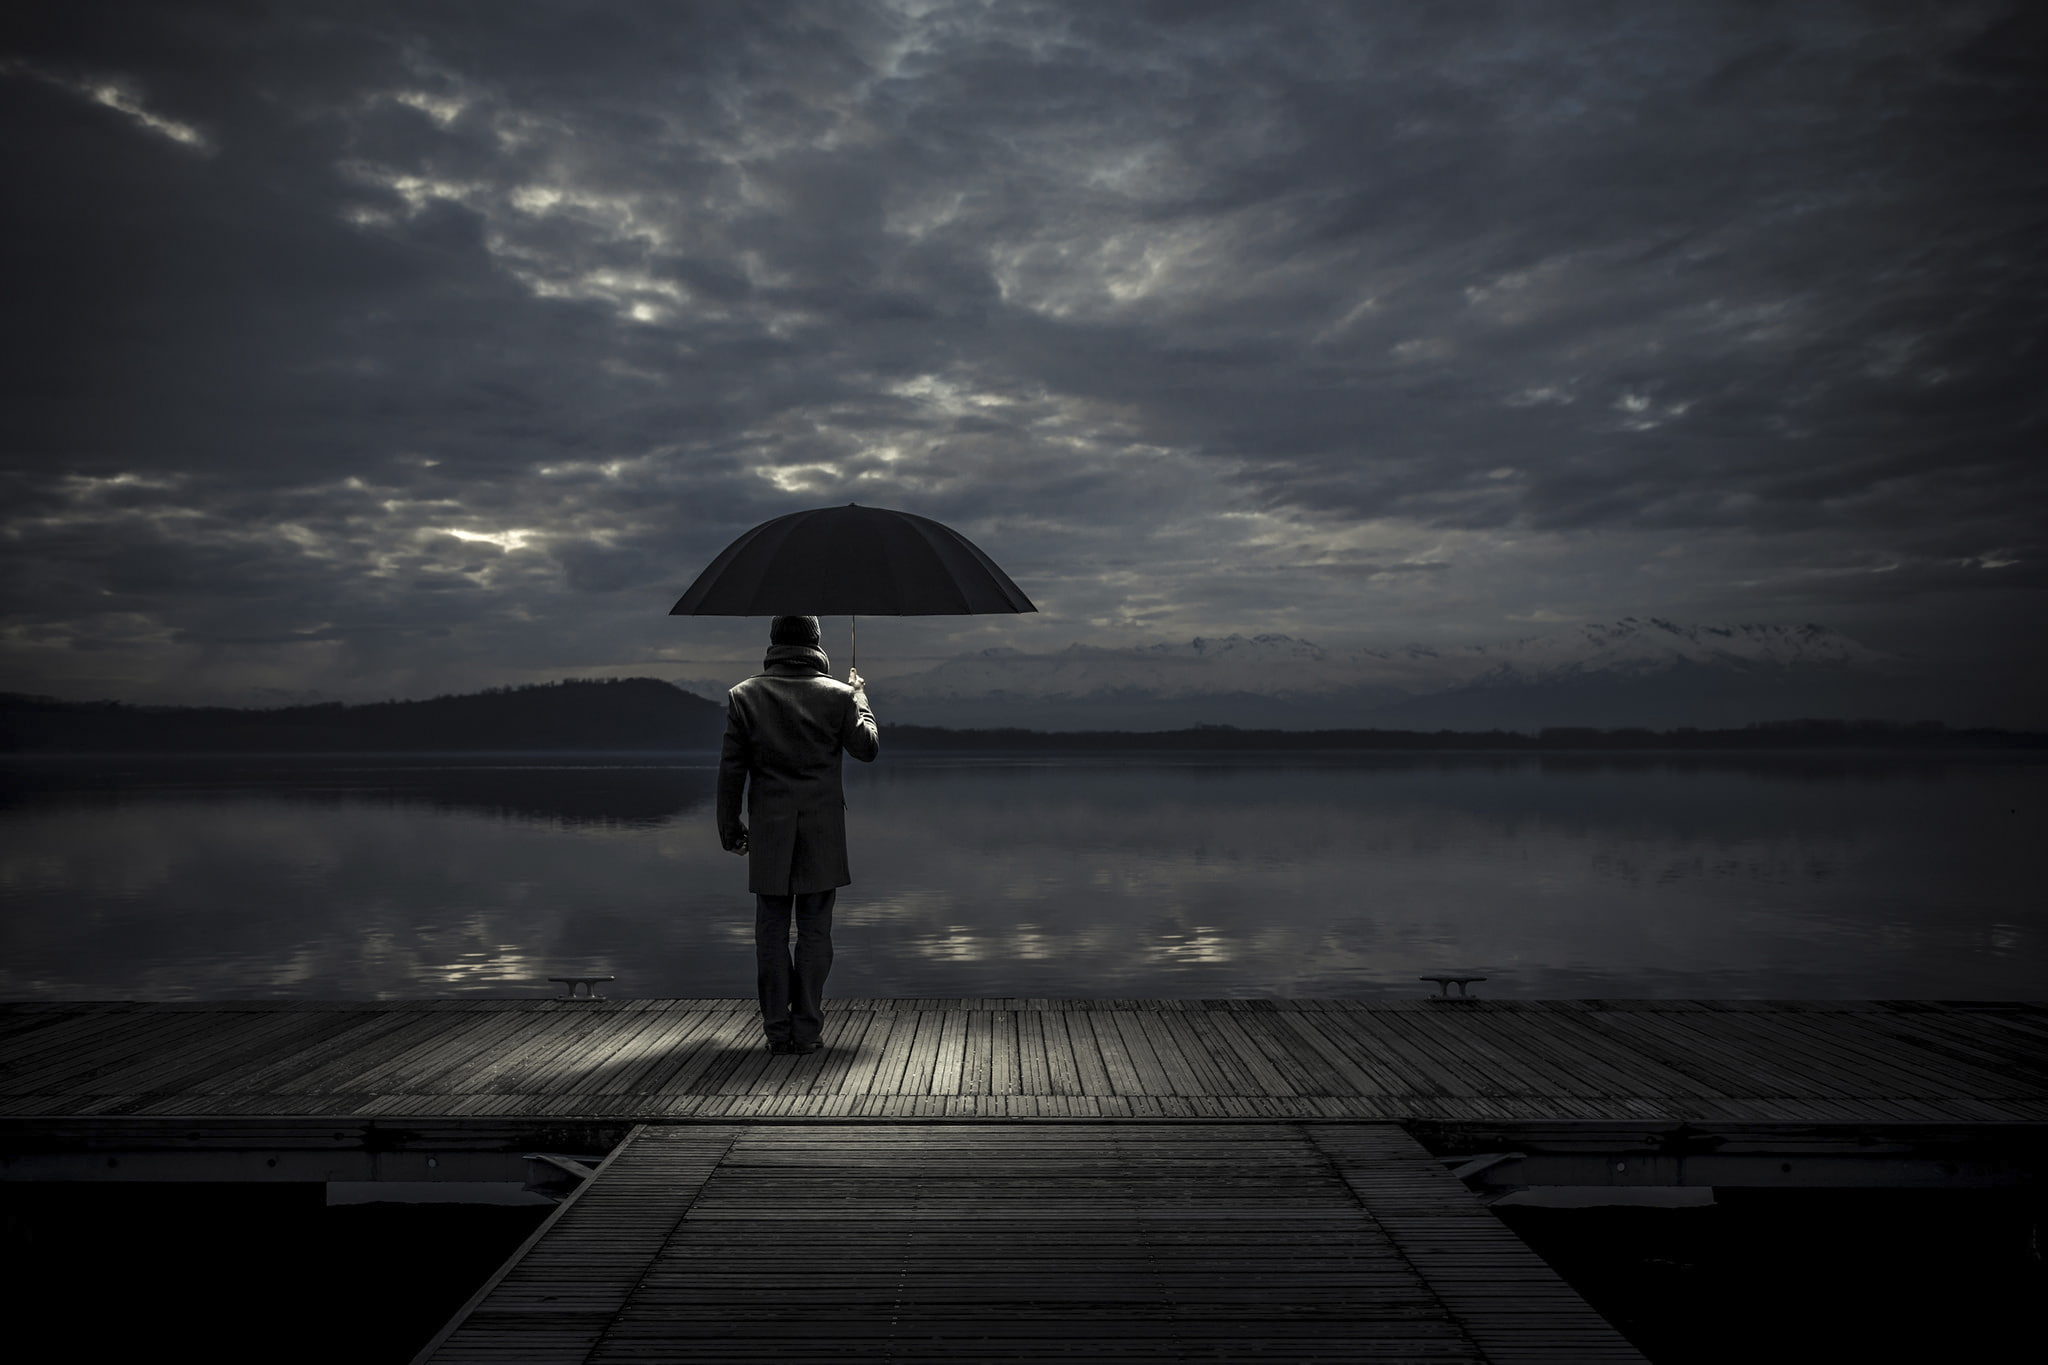 alone, love, man, umbrella, sad, protection, water, sky, one person